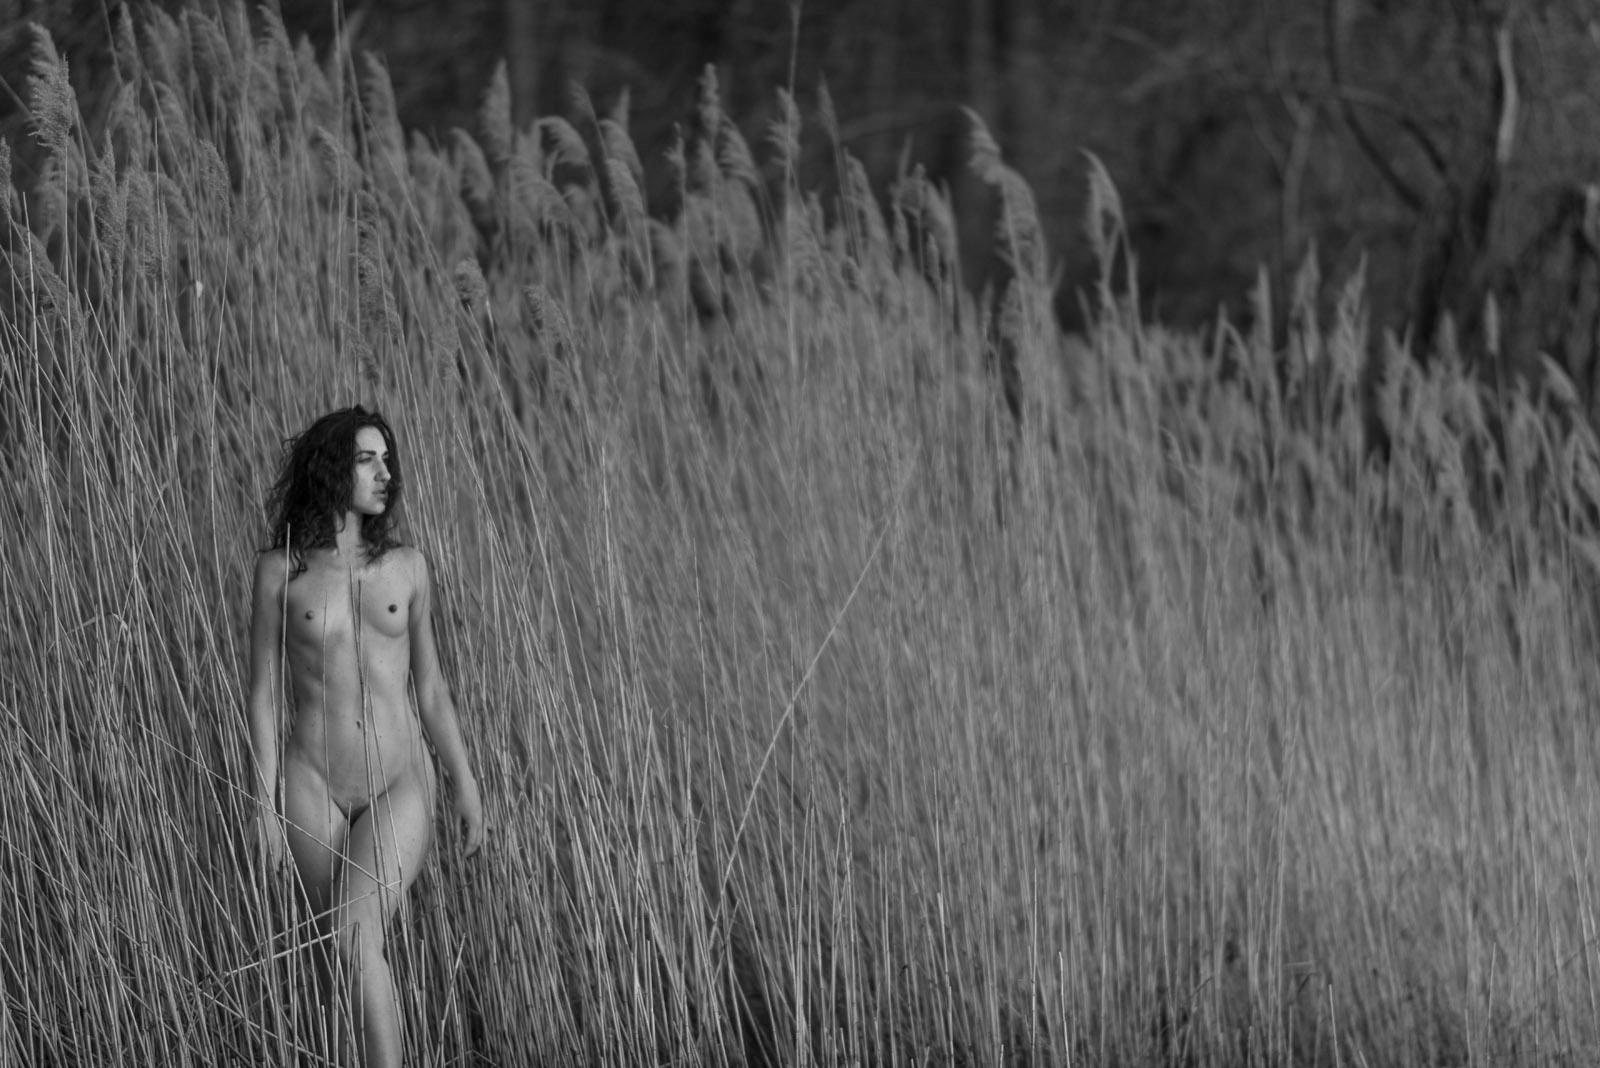 John Mazlish Nude Photograph - Woman in Reeds